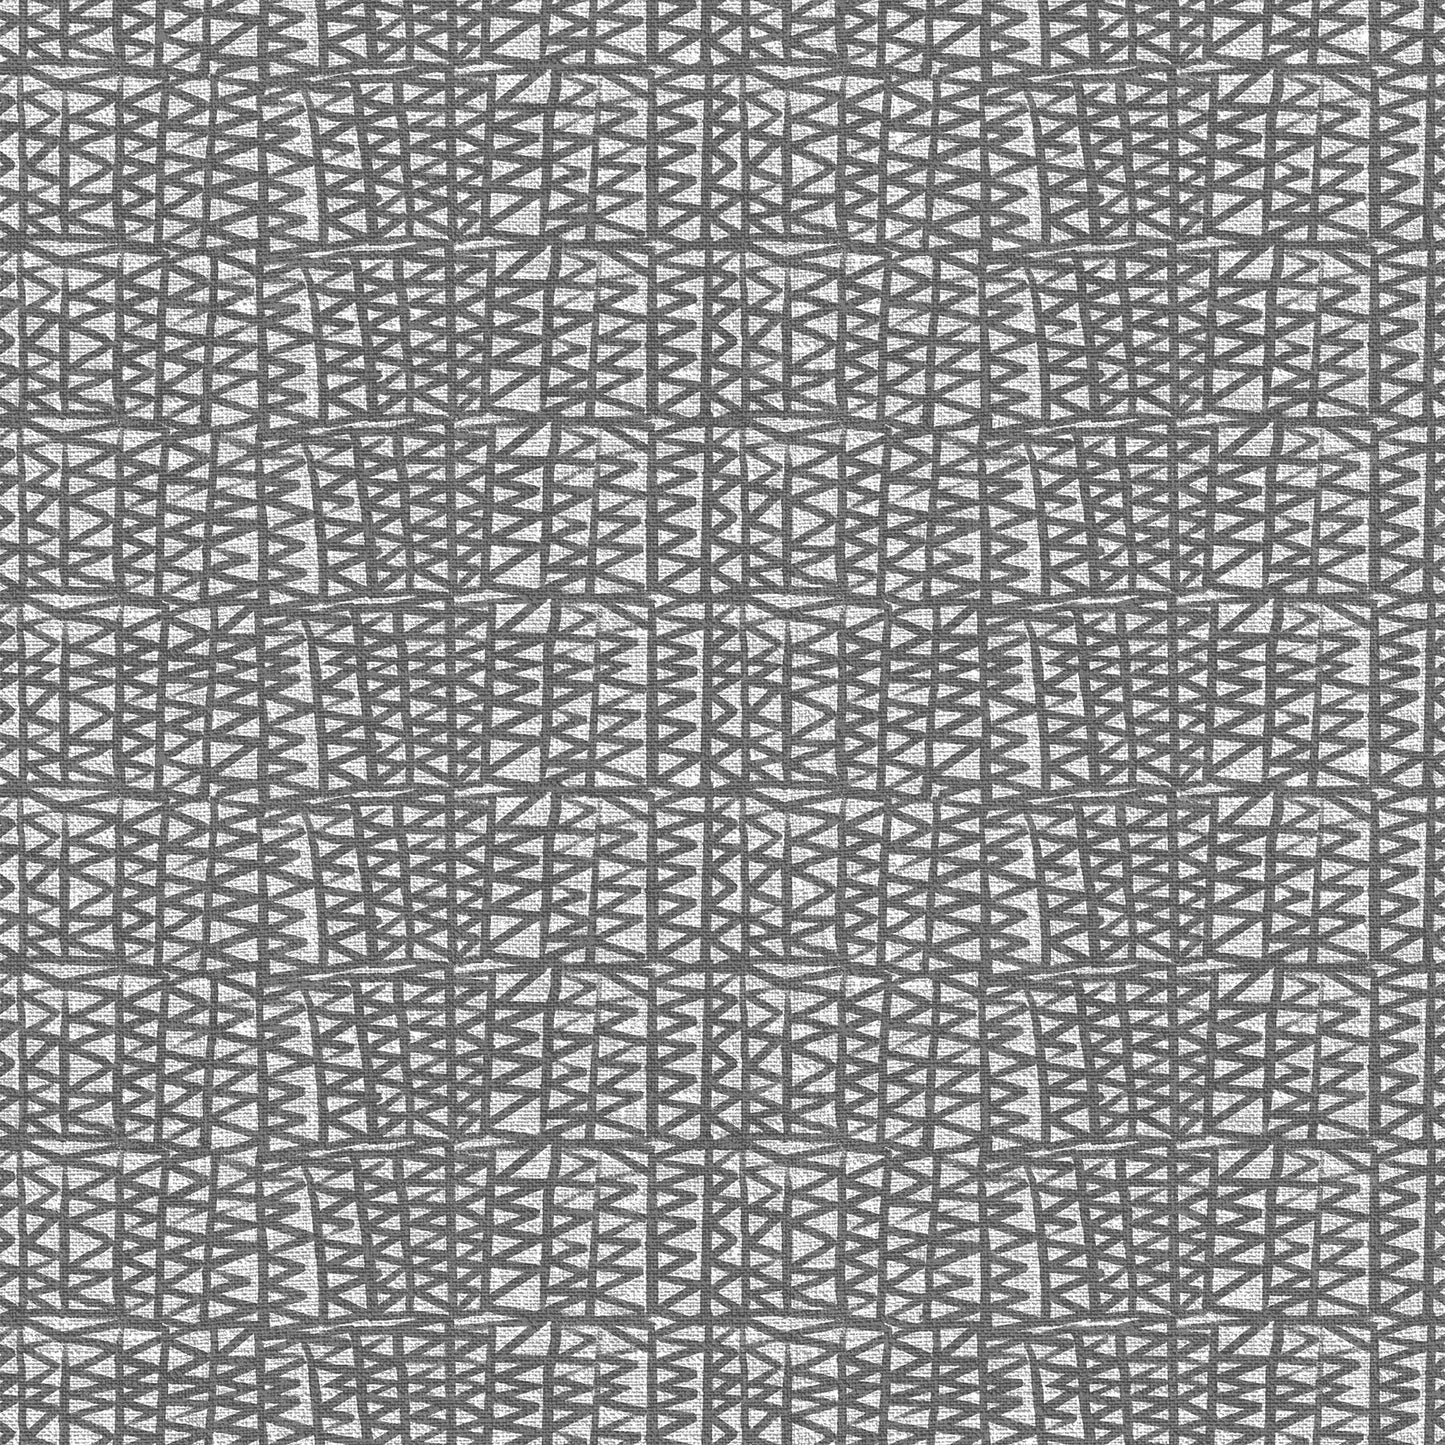 Zigzags on Grey - Workshop by Libs Elliott